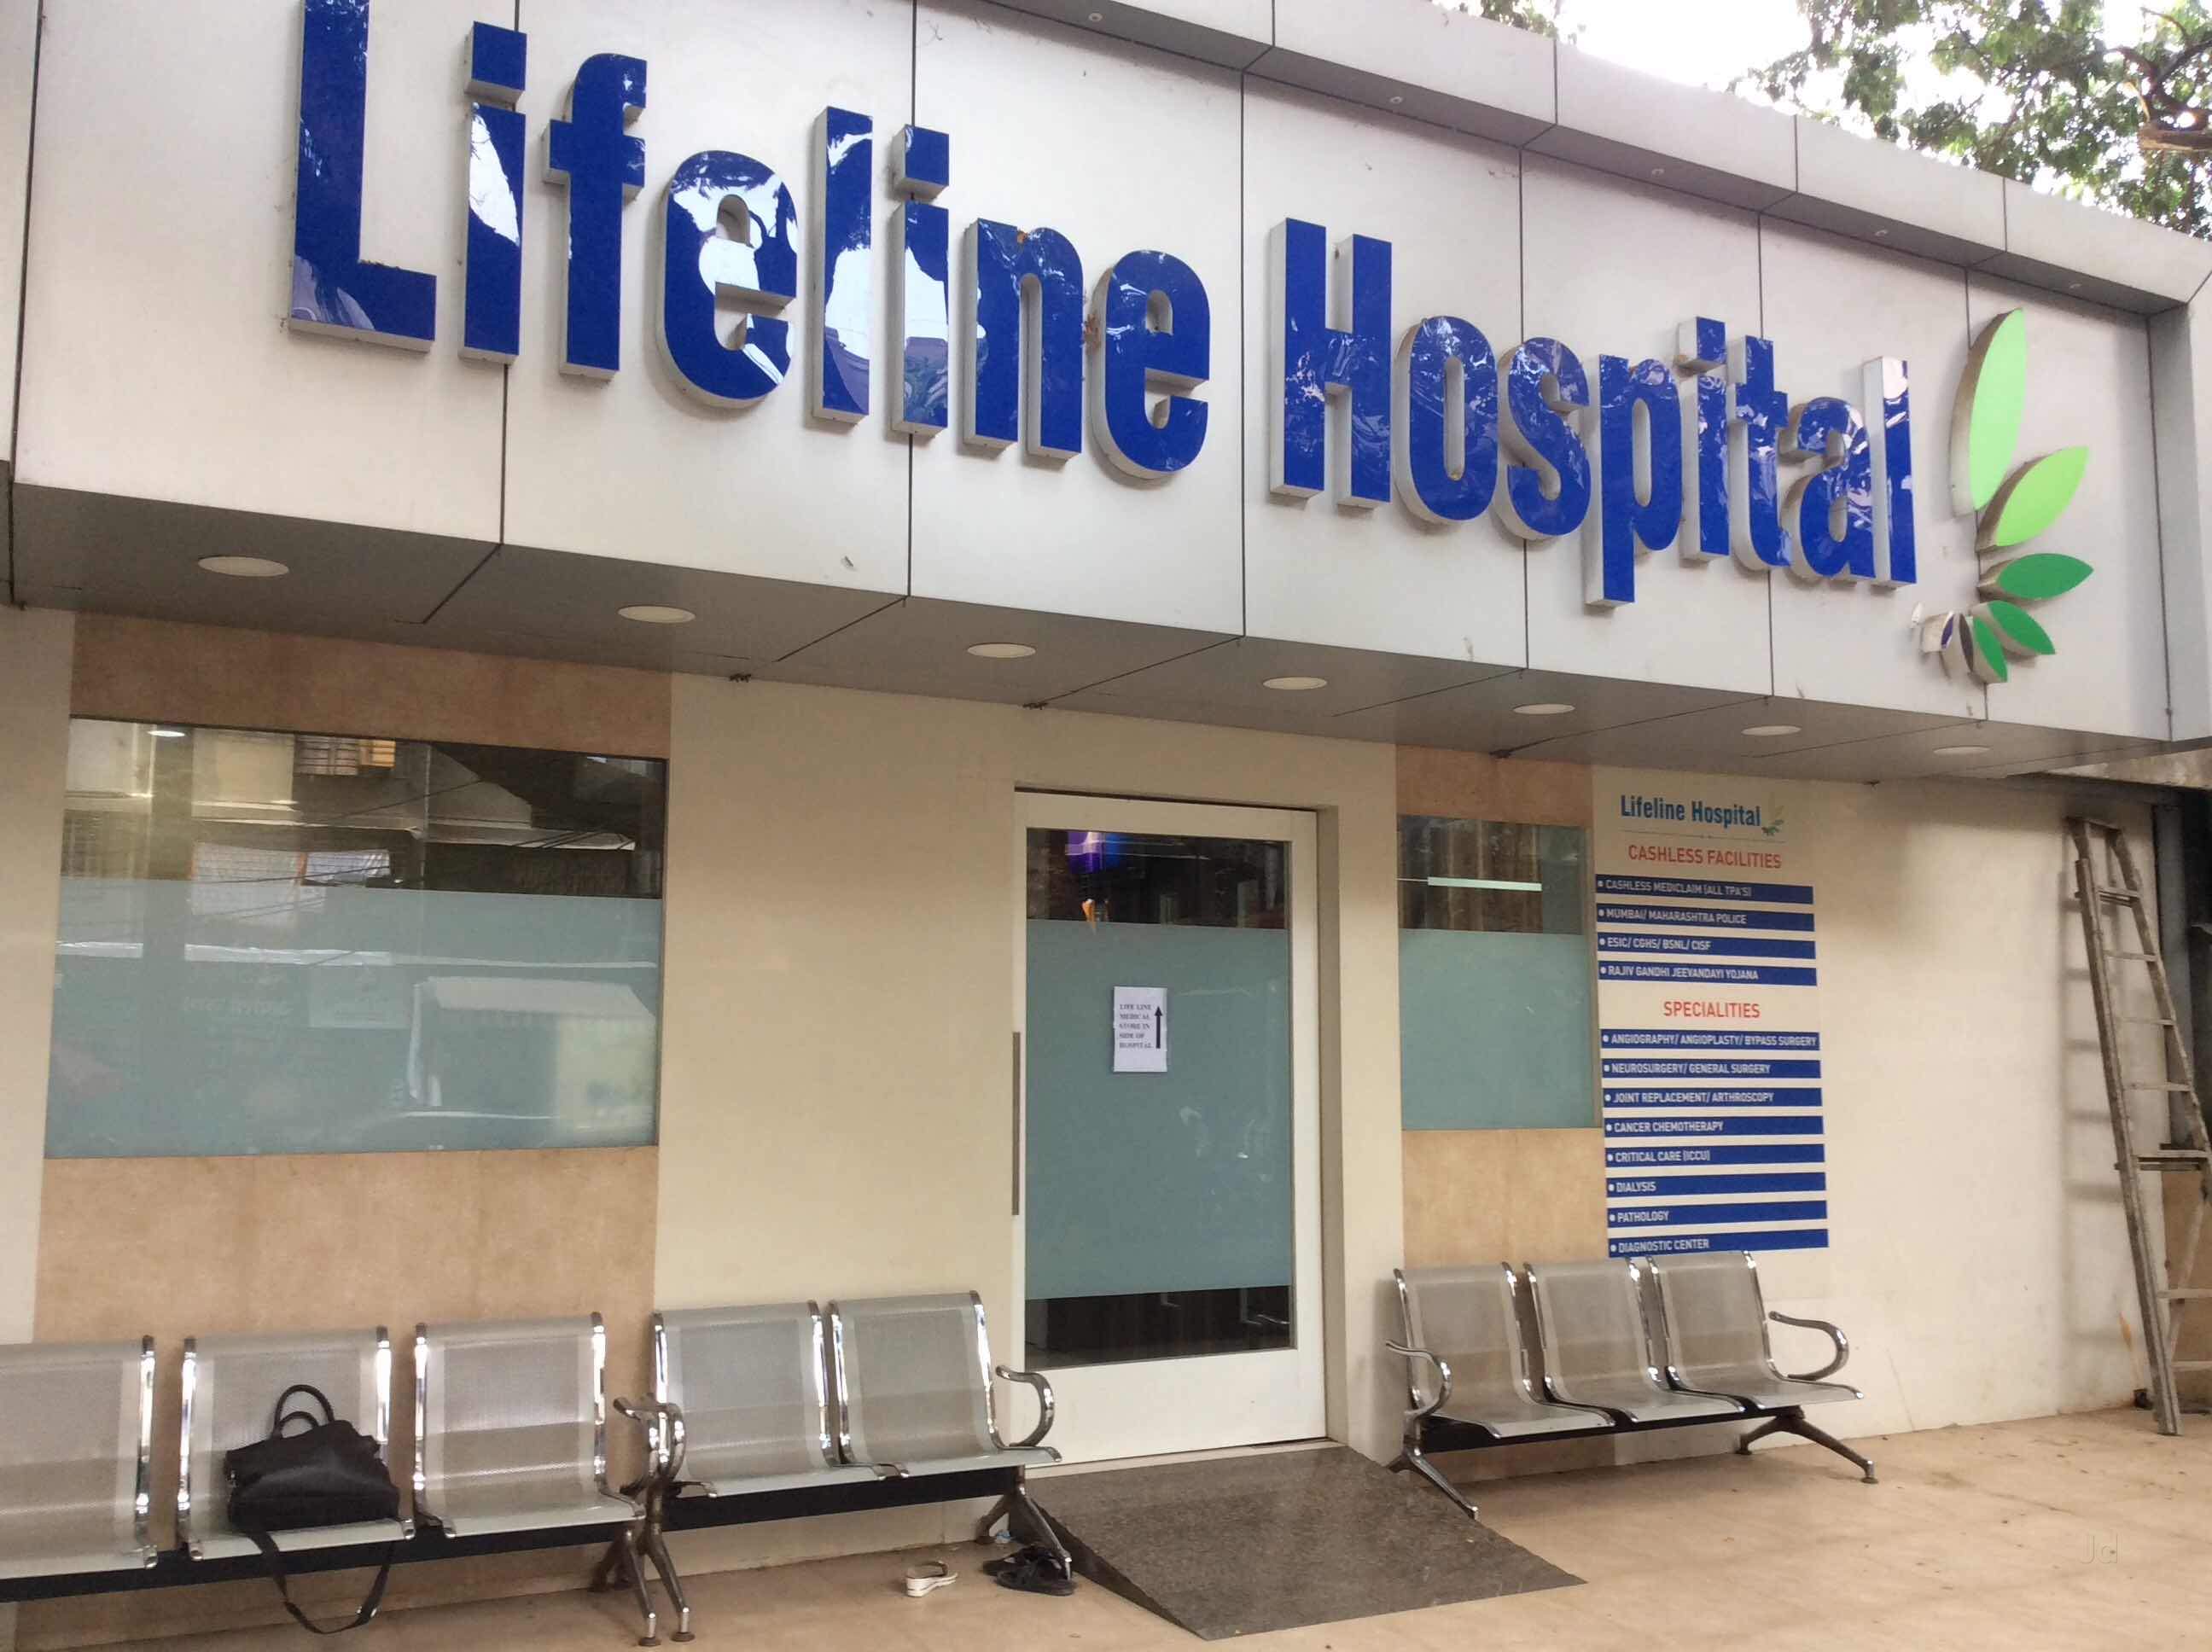 Lifeline Hospital Medical Services | Hospitals